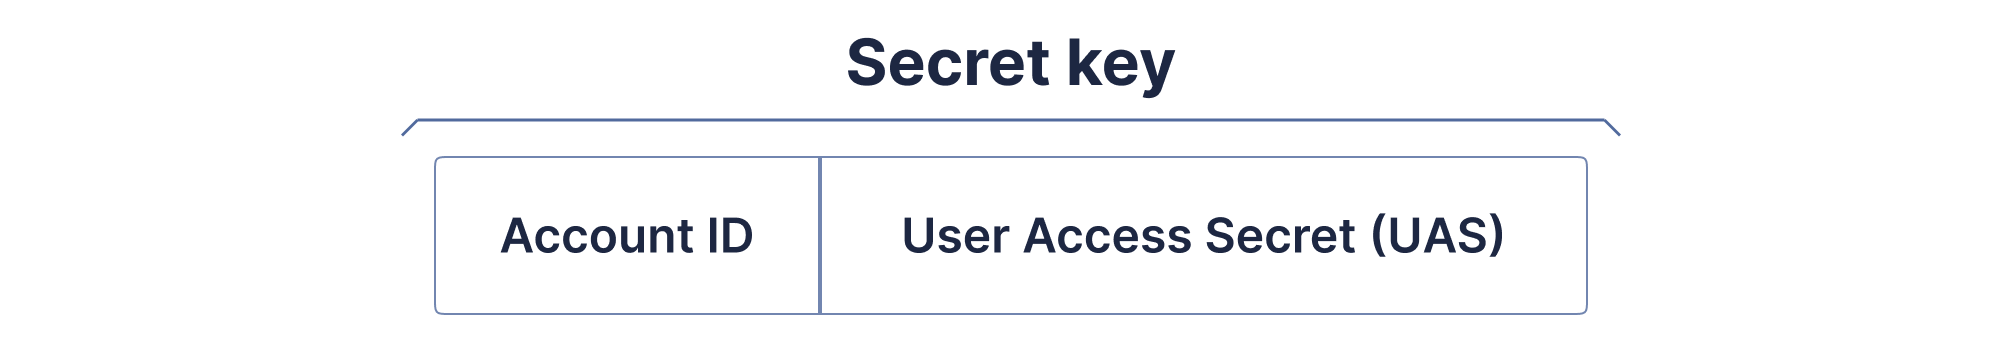 Image 2: Composition of Secret Key